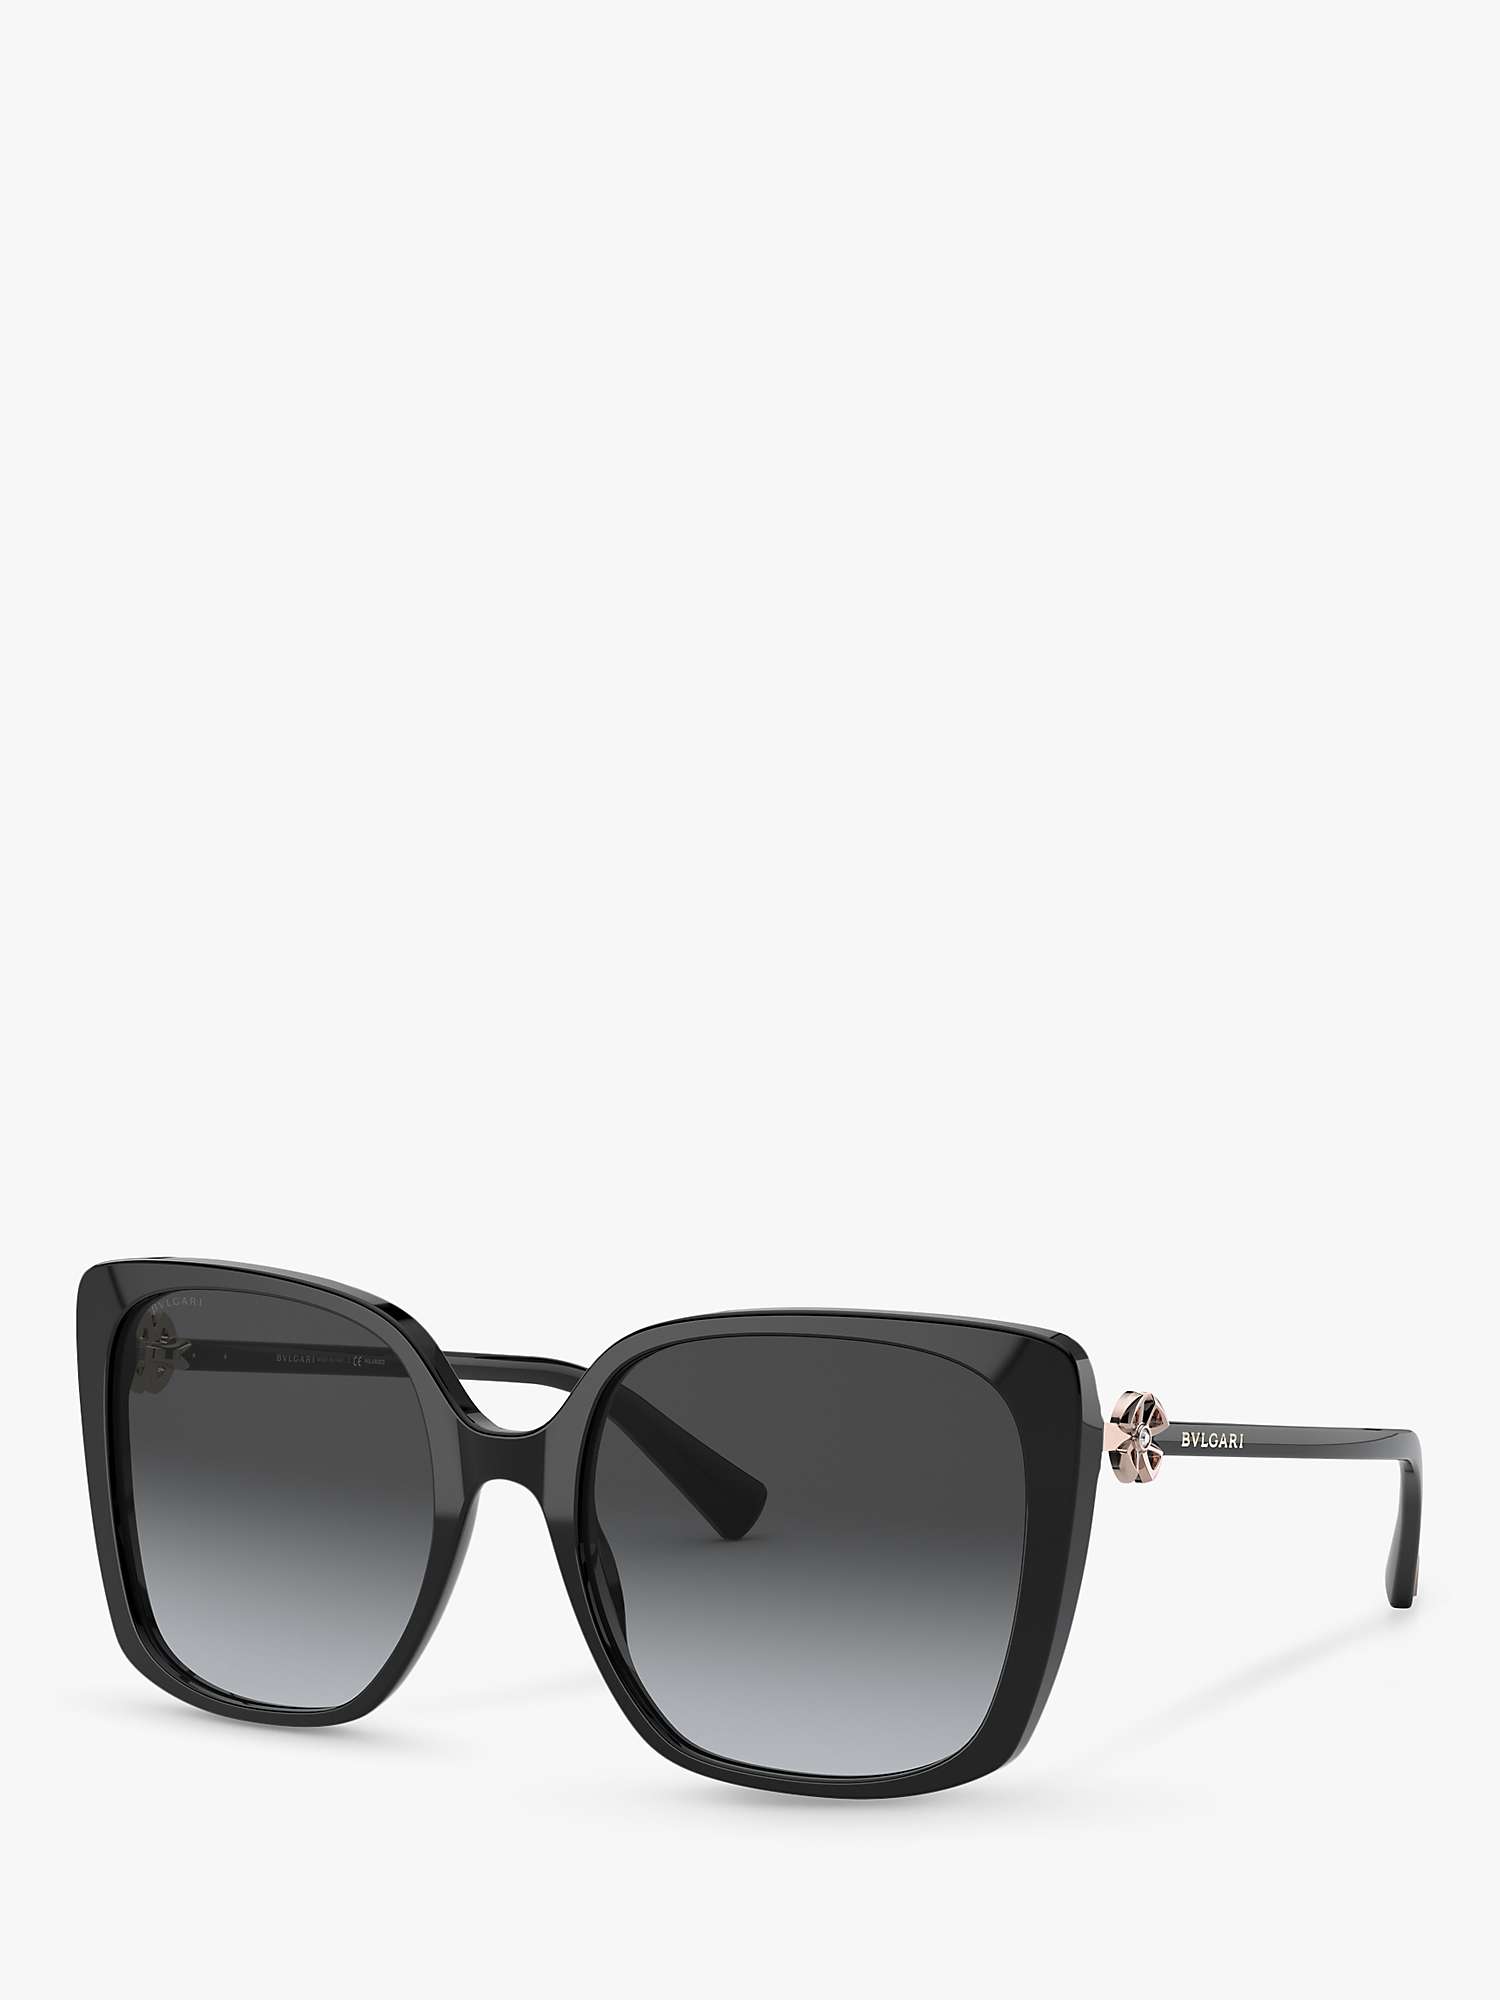 Buy BVLGARI BV8225B Women's Polarised Square Sunglasses, Black Online at johnlewis.com